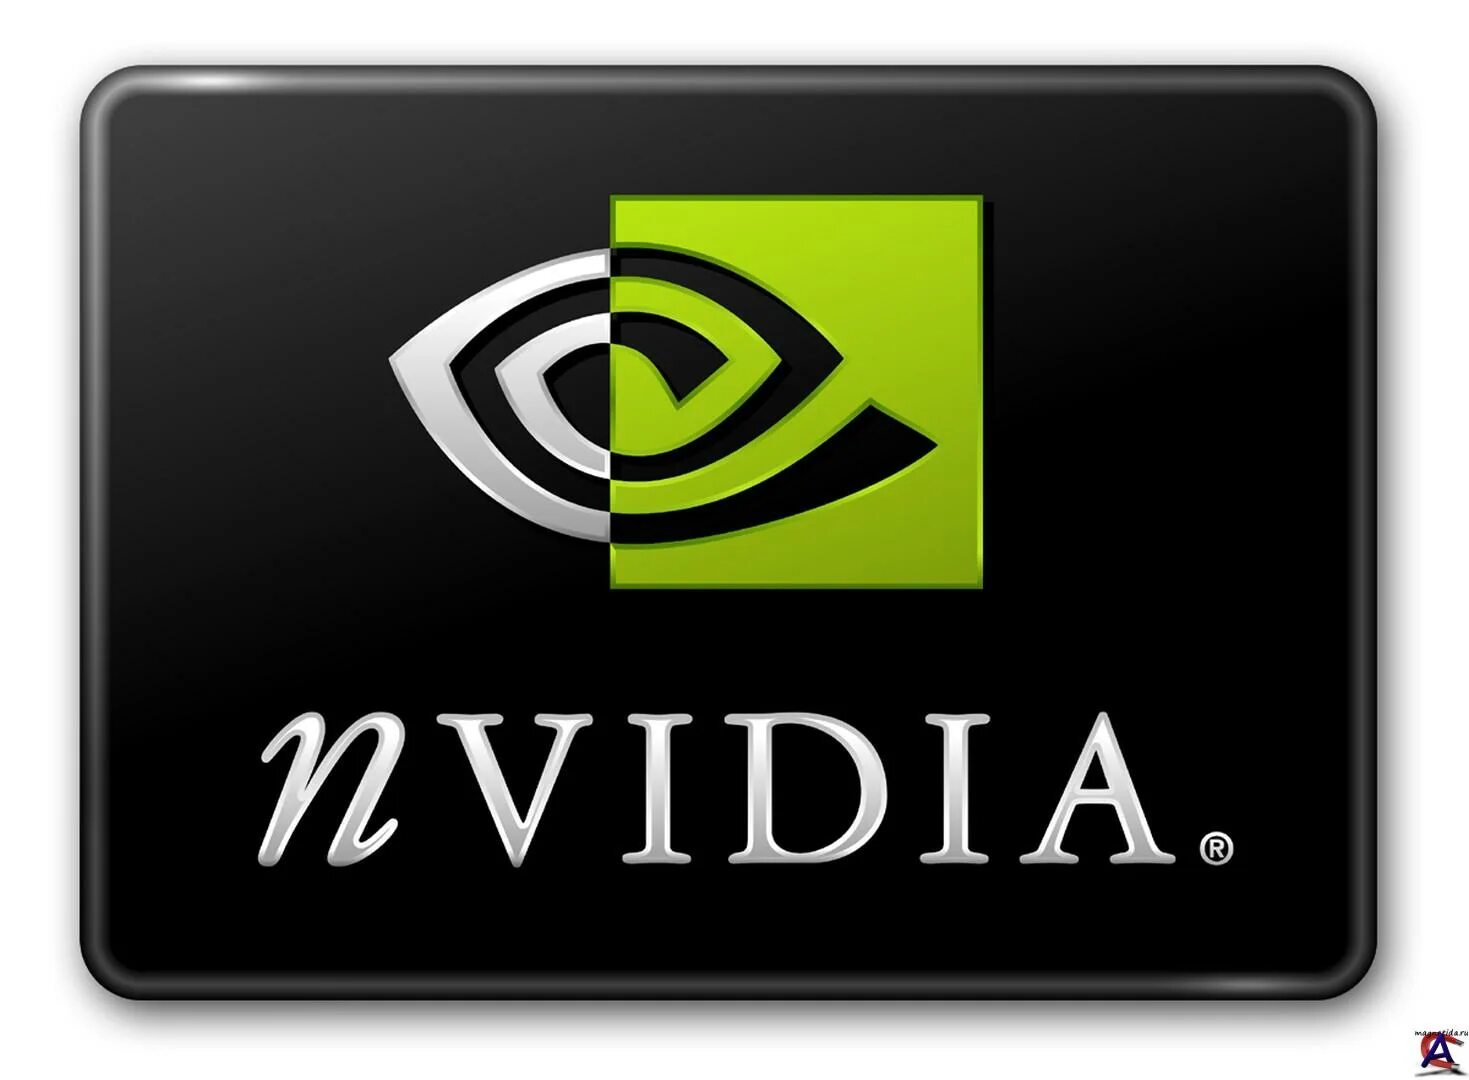 Инвидеа. NVIDIA. NVIDIA лого. Логотип видеокарты NVIDIA. Vildia.